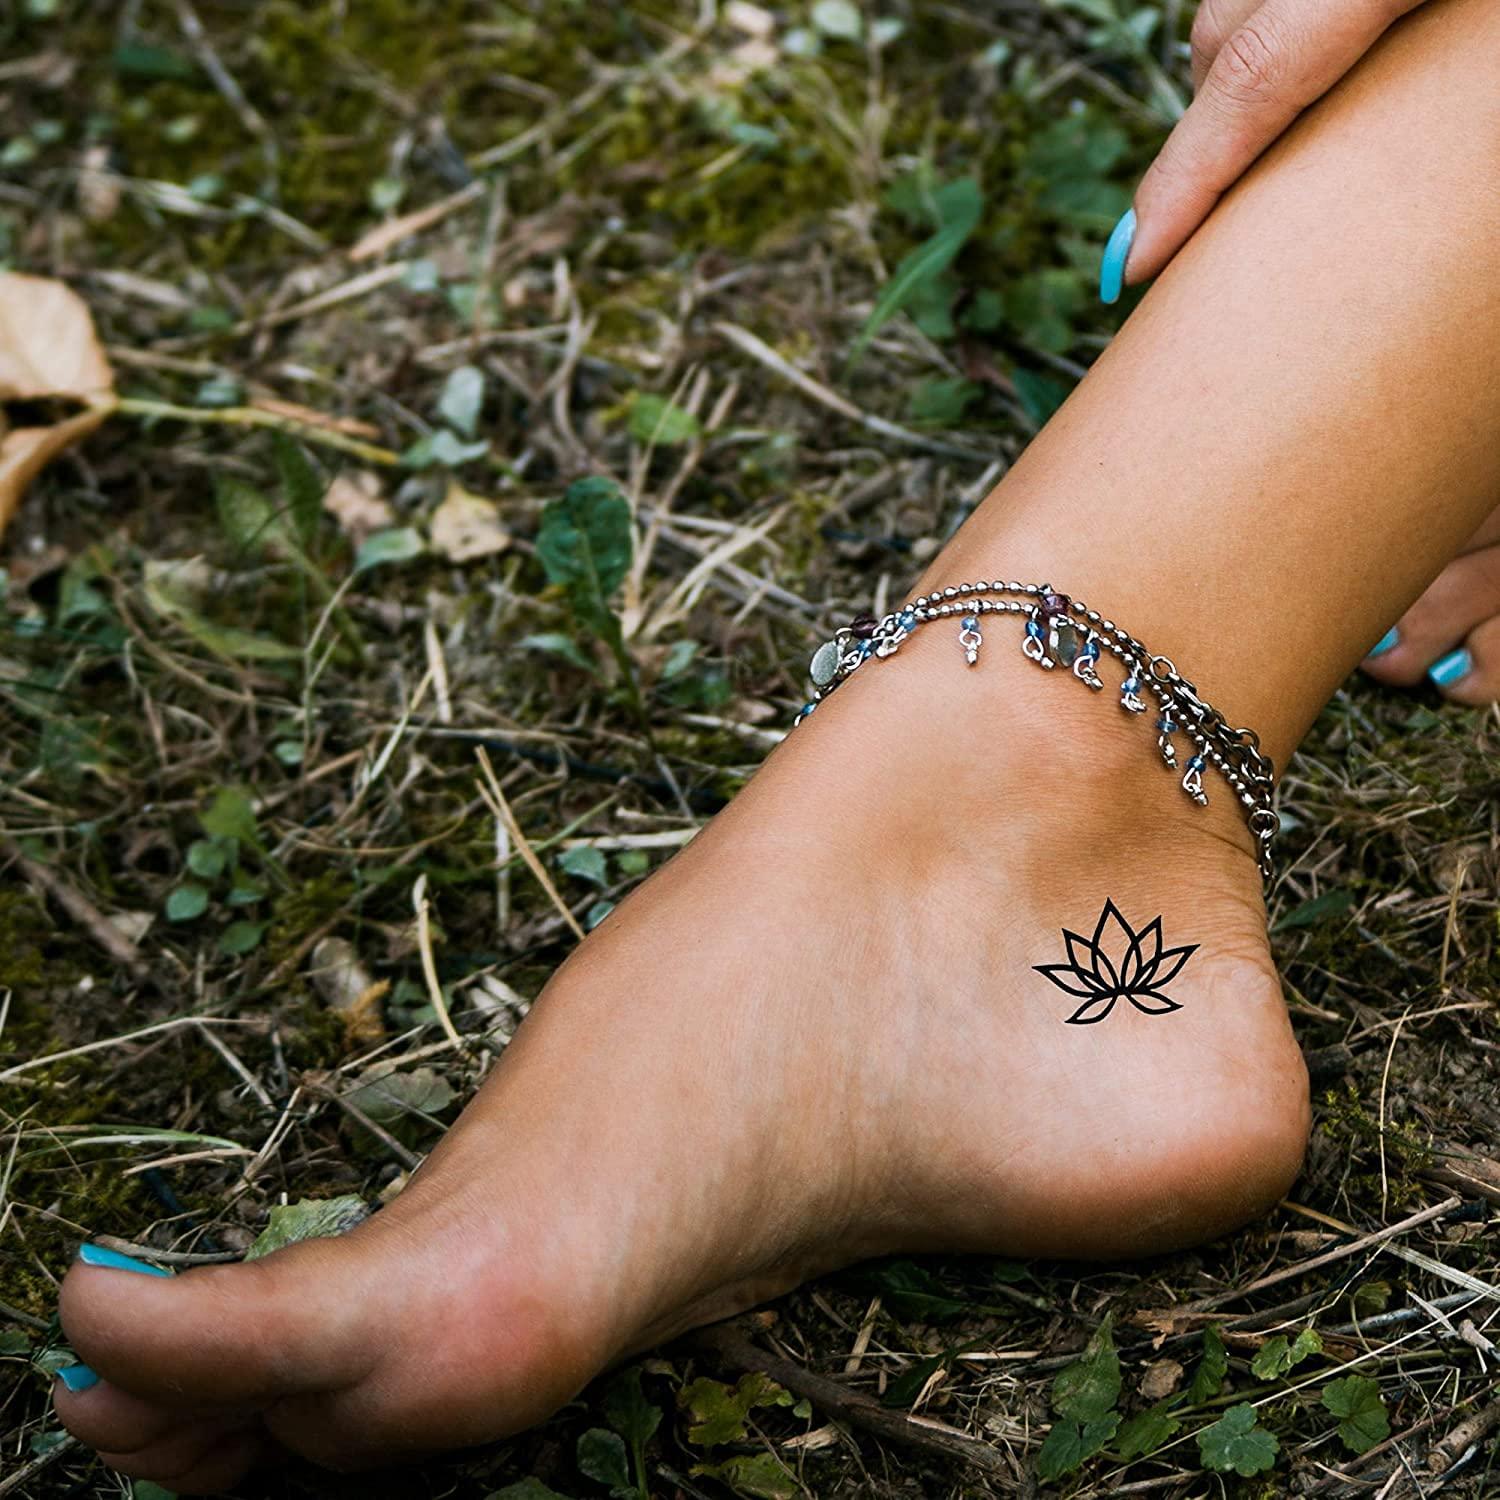 ankle tattoos flowers - Lemon8 Search